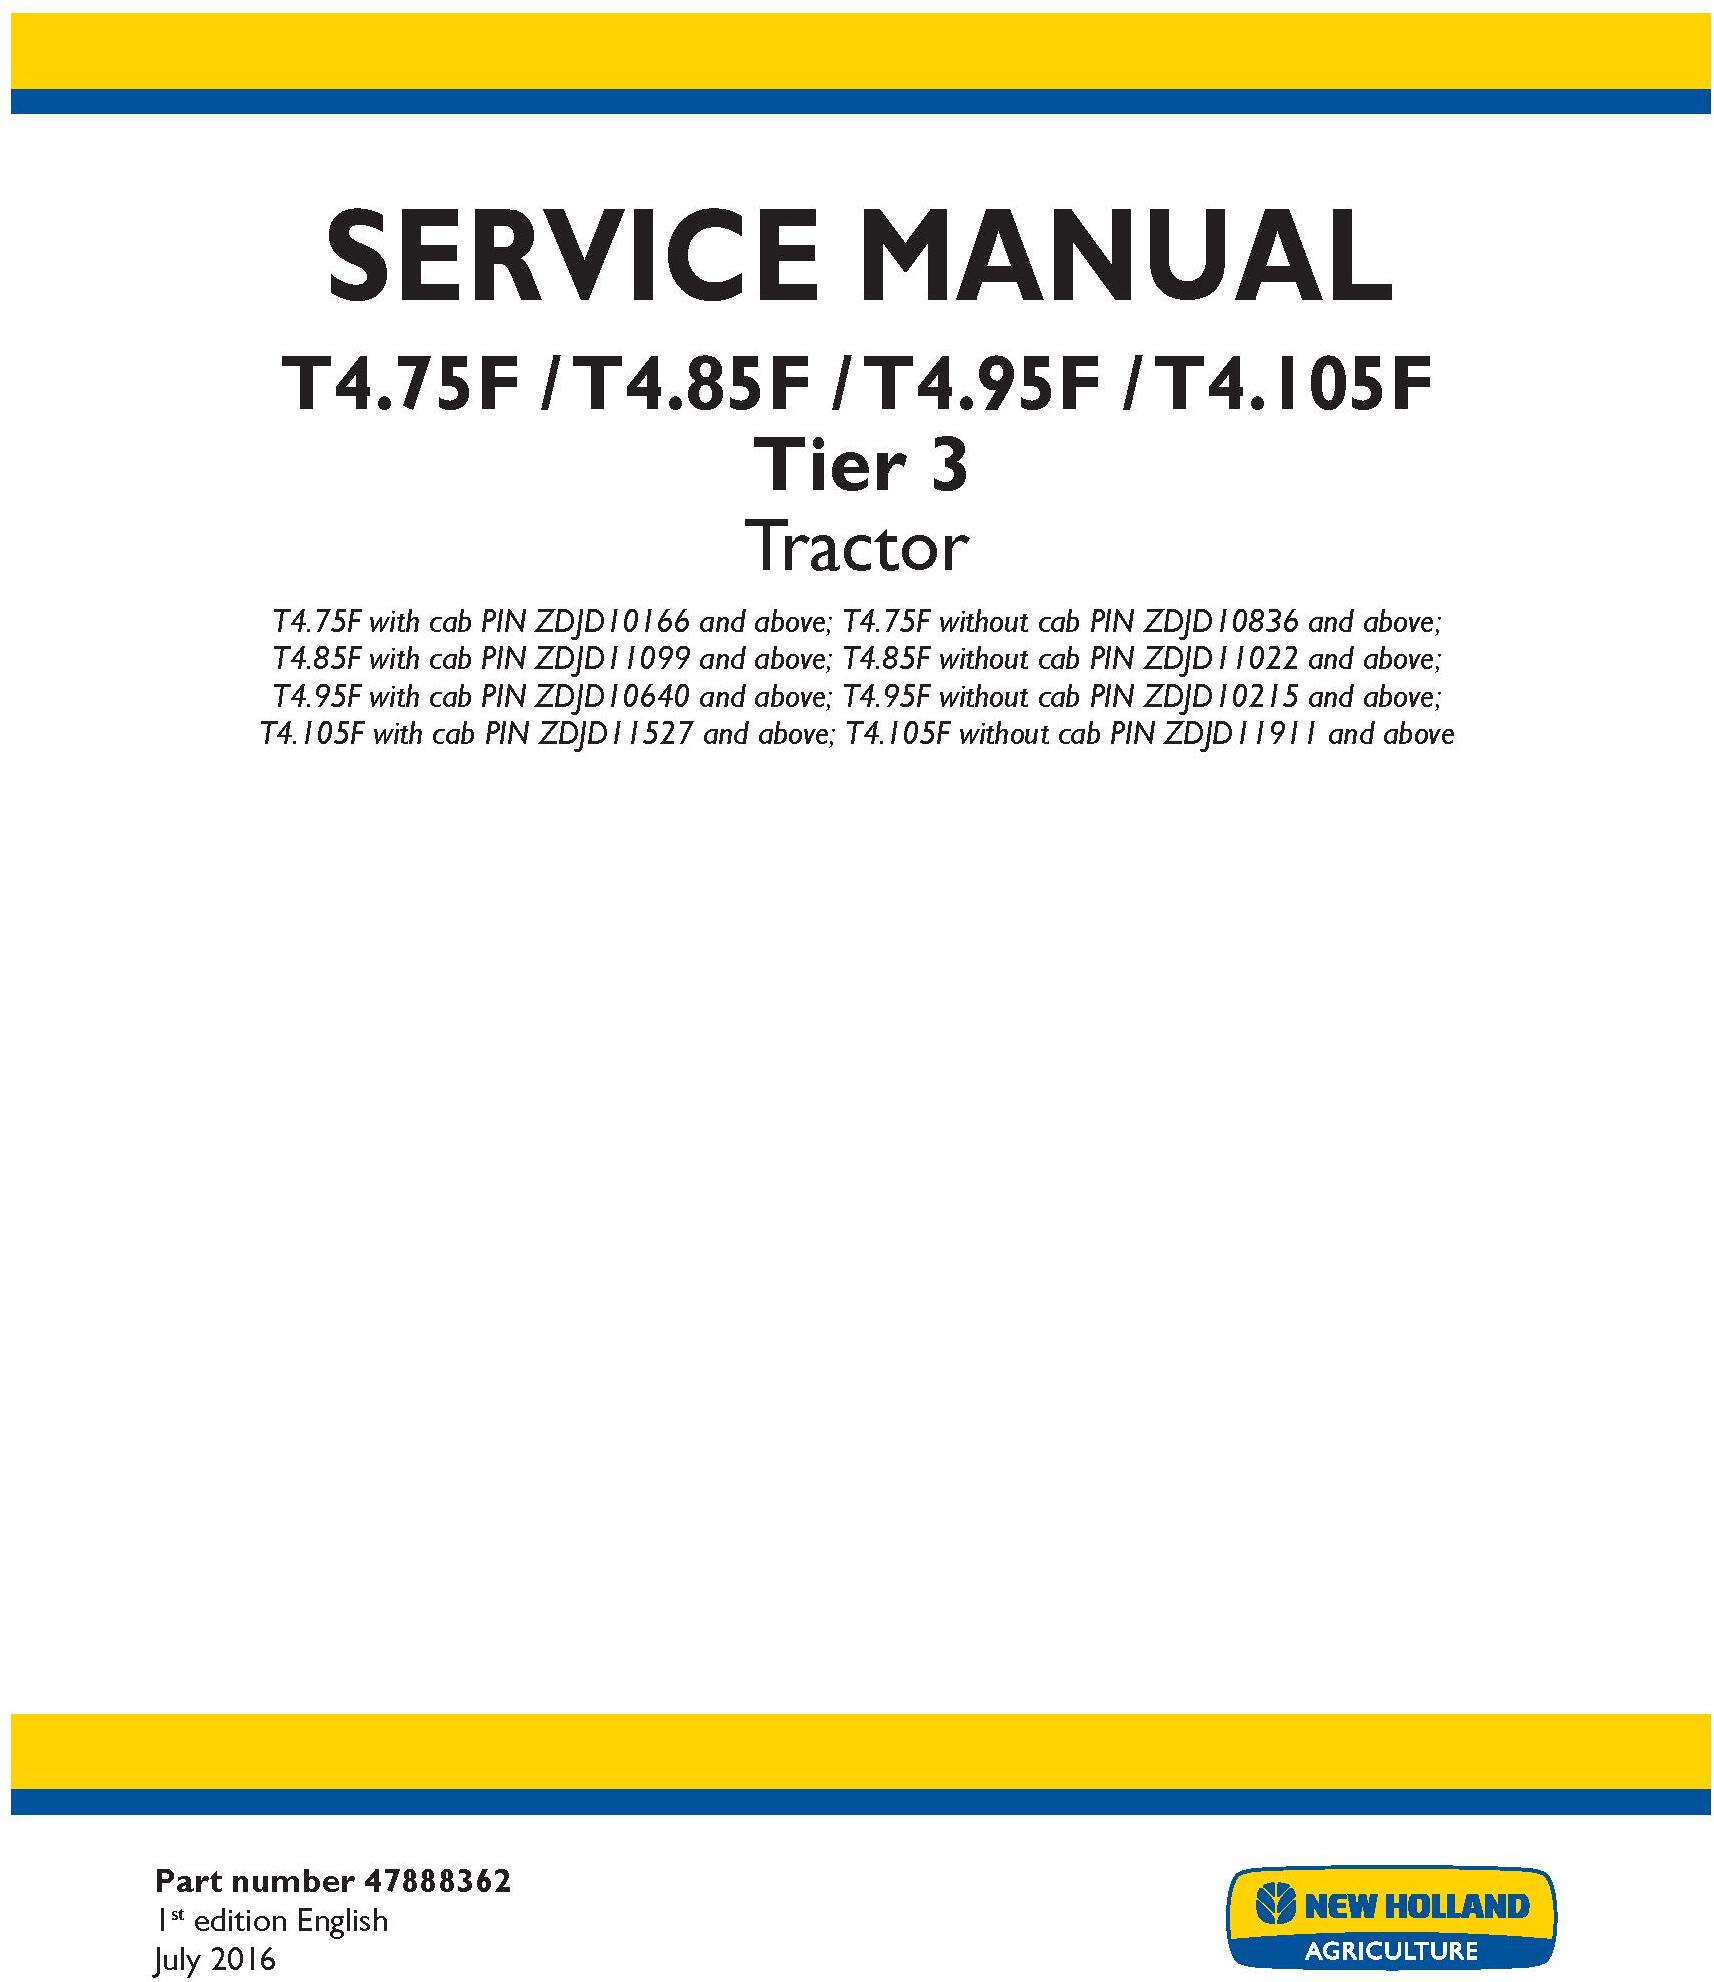 New Holland T4.75F, T4.85F, T4.95F, T4.105F Tier 3 Tractor Complete Service Manual (North America) - 19440